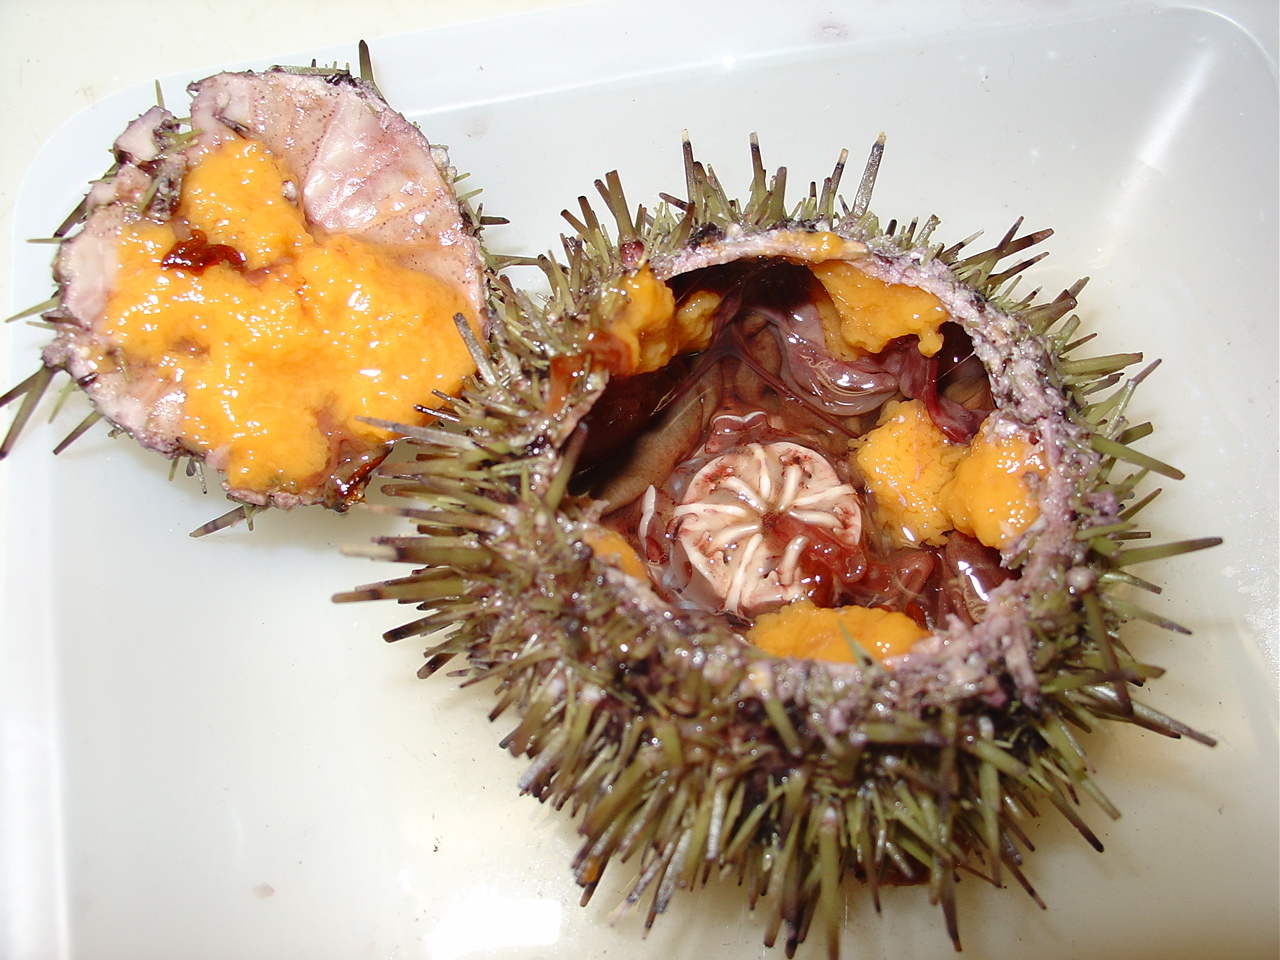 Green sea urchins in a rearing tank (laboratory of Murmansk Marine